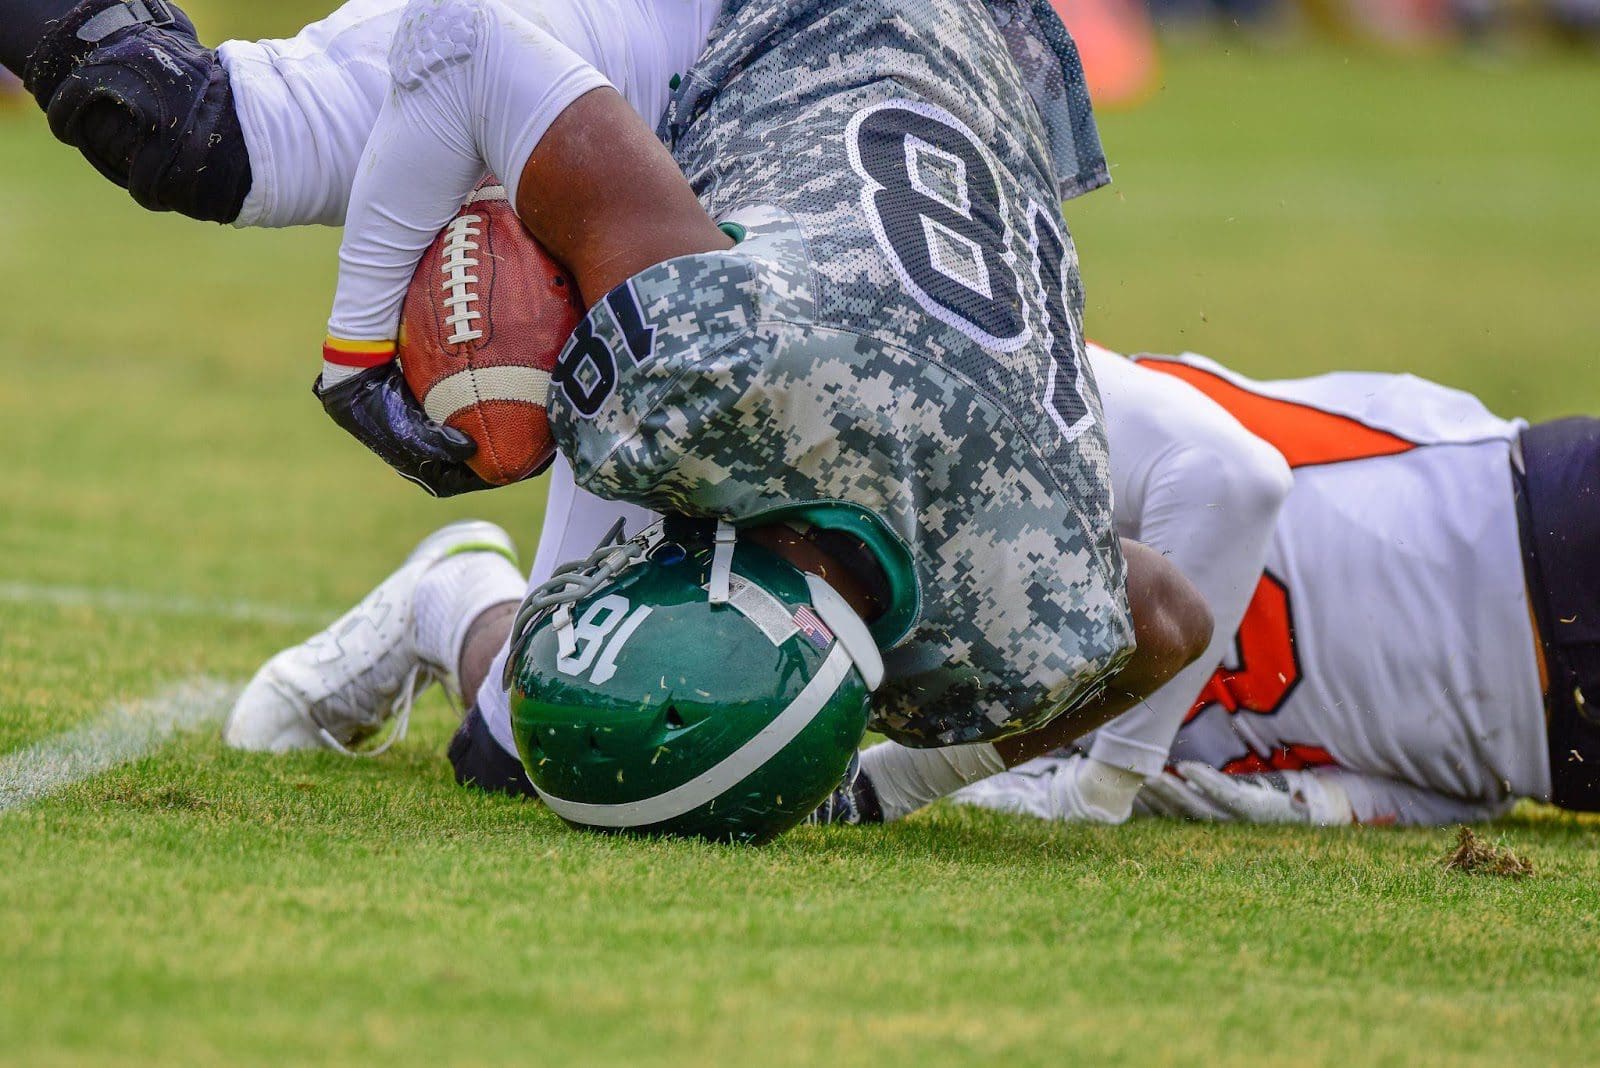 High school football player gets tackled, lands on his shoulder.